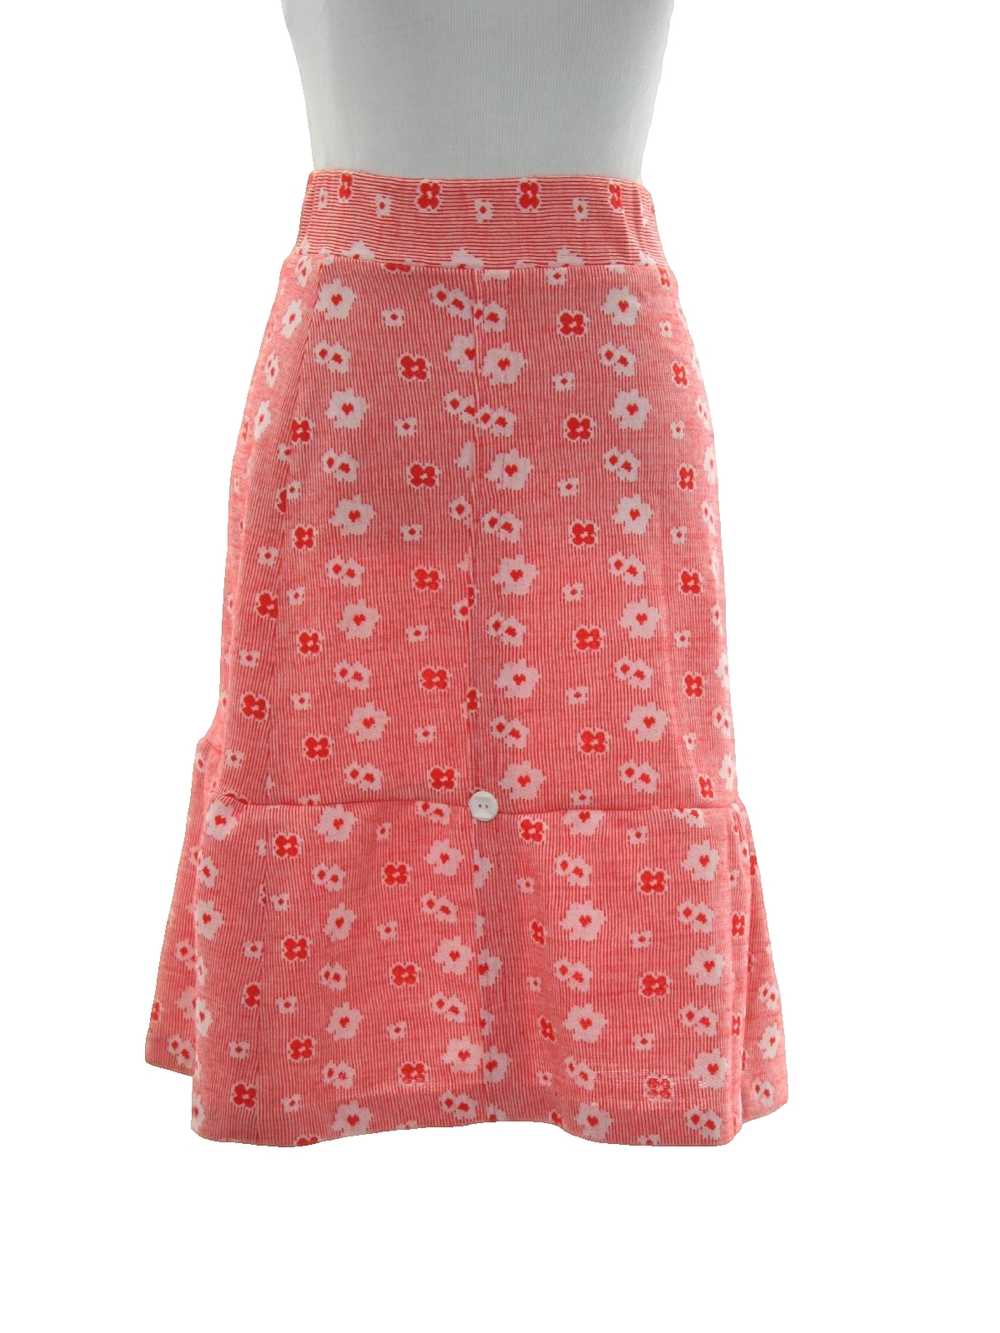 1970's Skirt - image 1